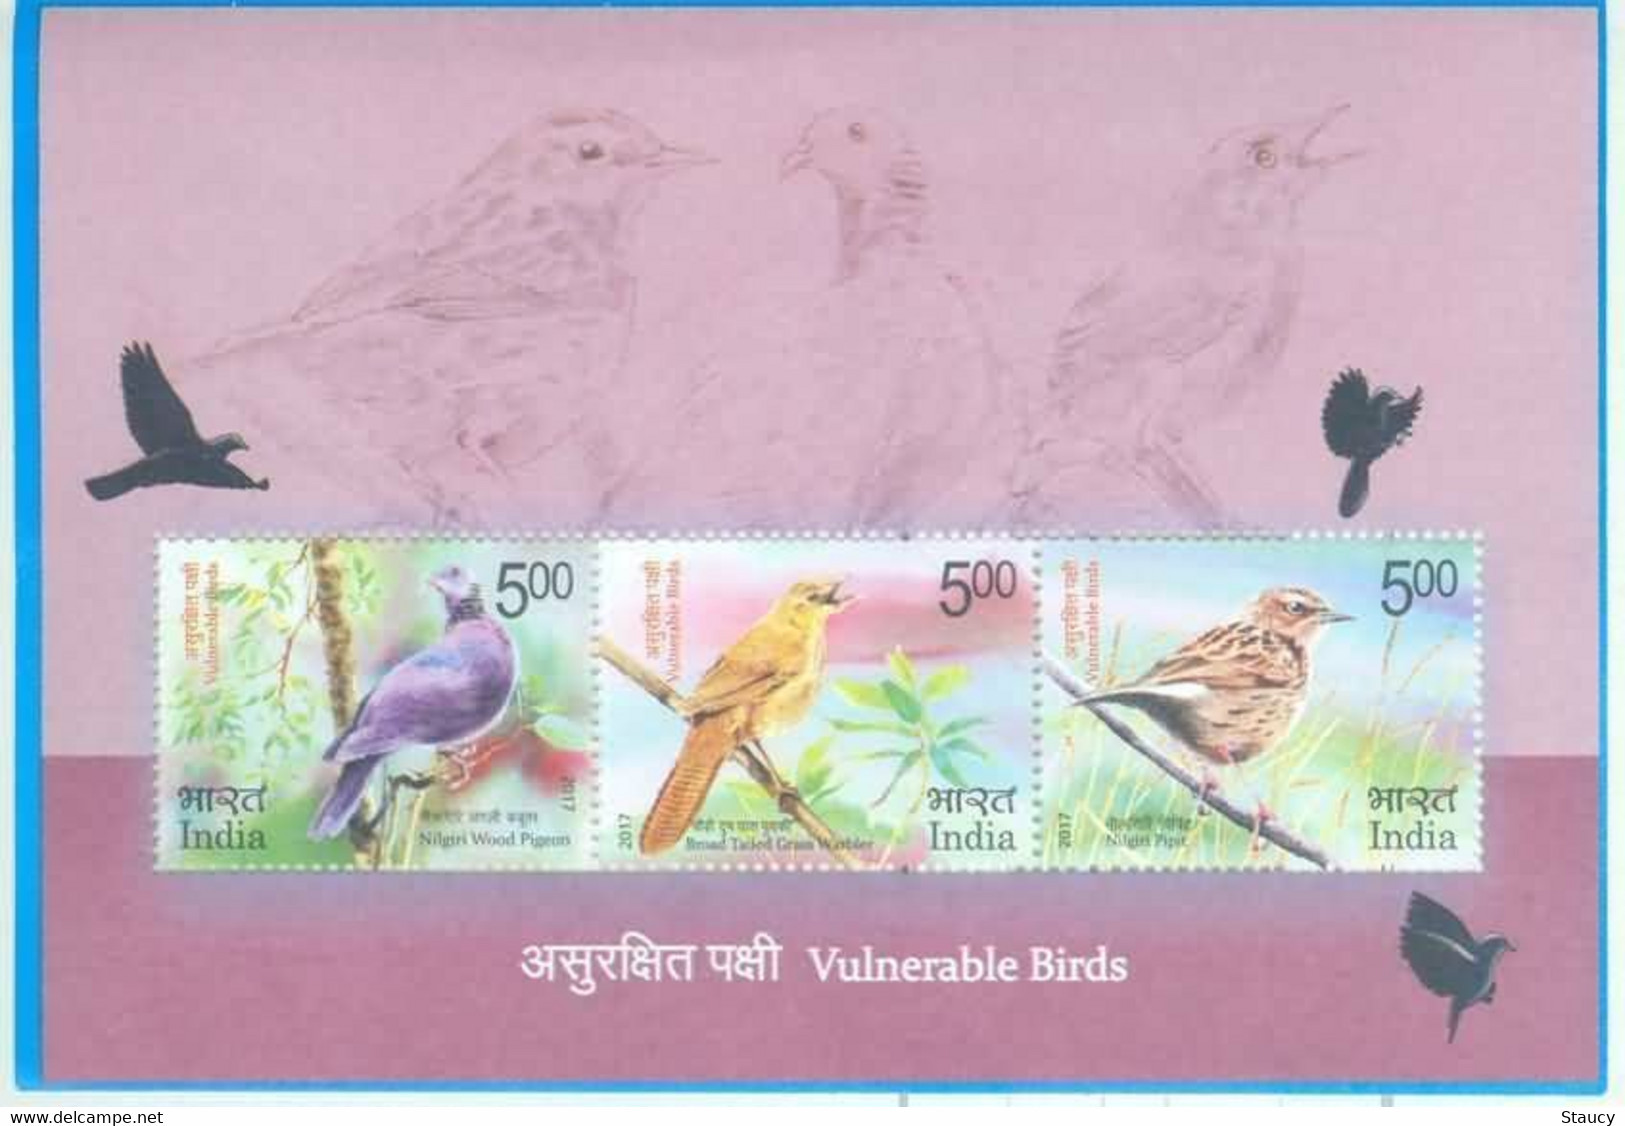 India 2017 Vulnerable Birds Endangered Animal Species Pigeon MINIATURE SHEET MS MNH - Spatzen